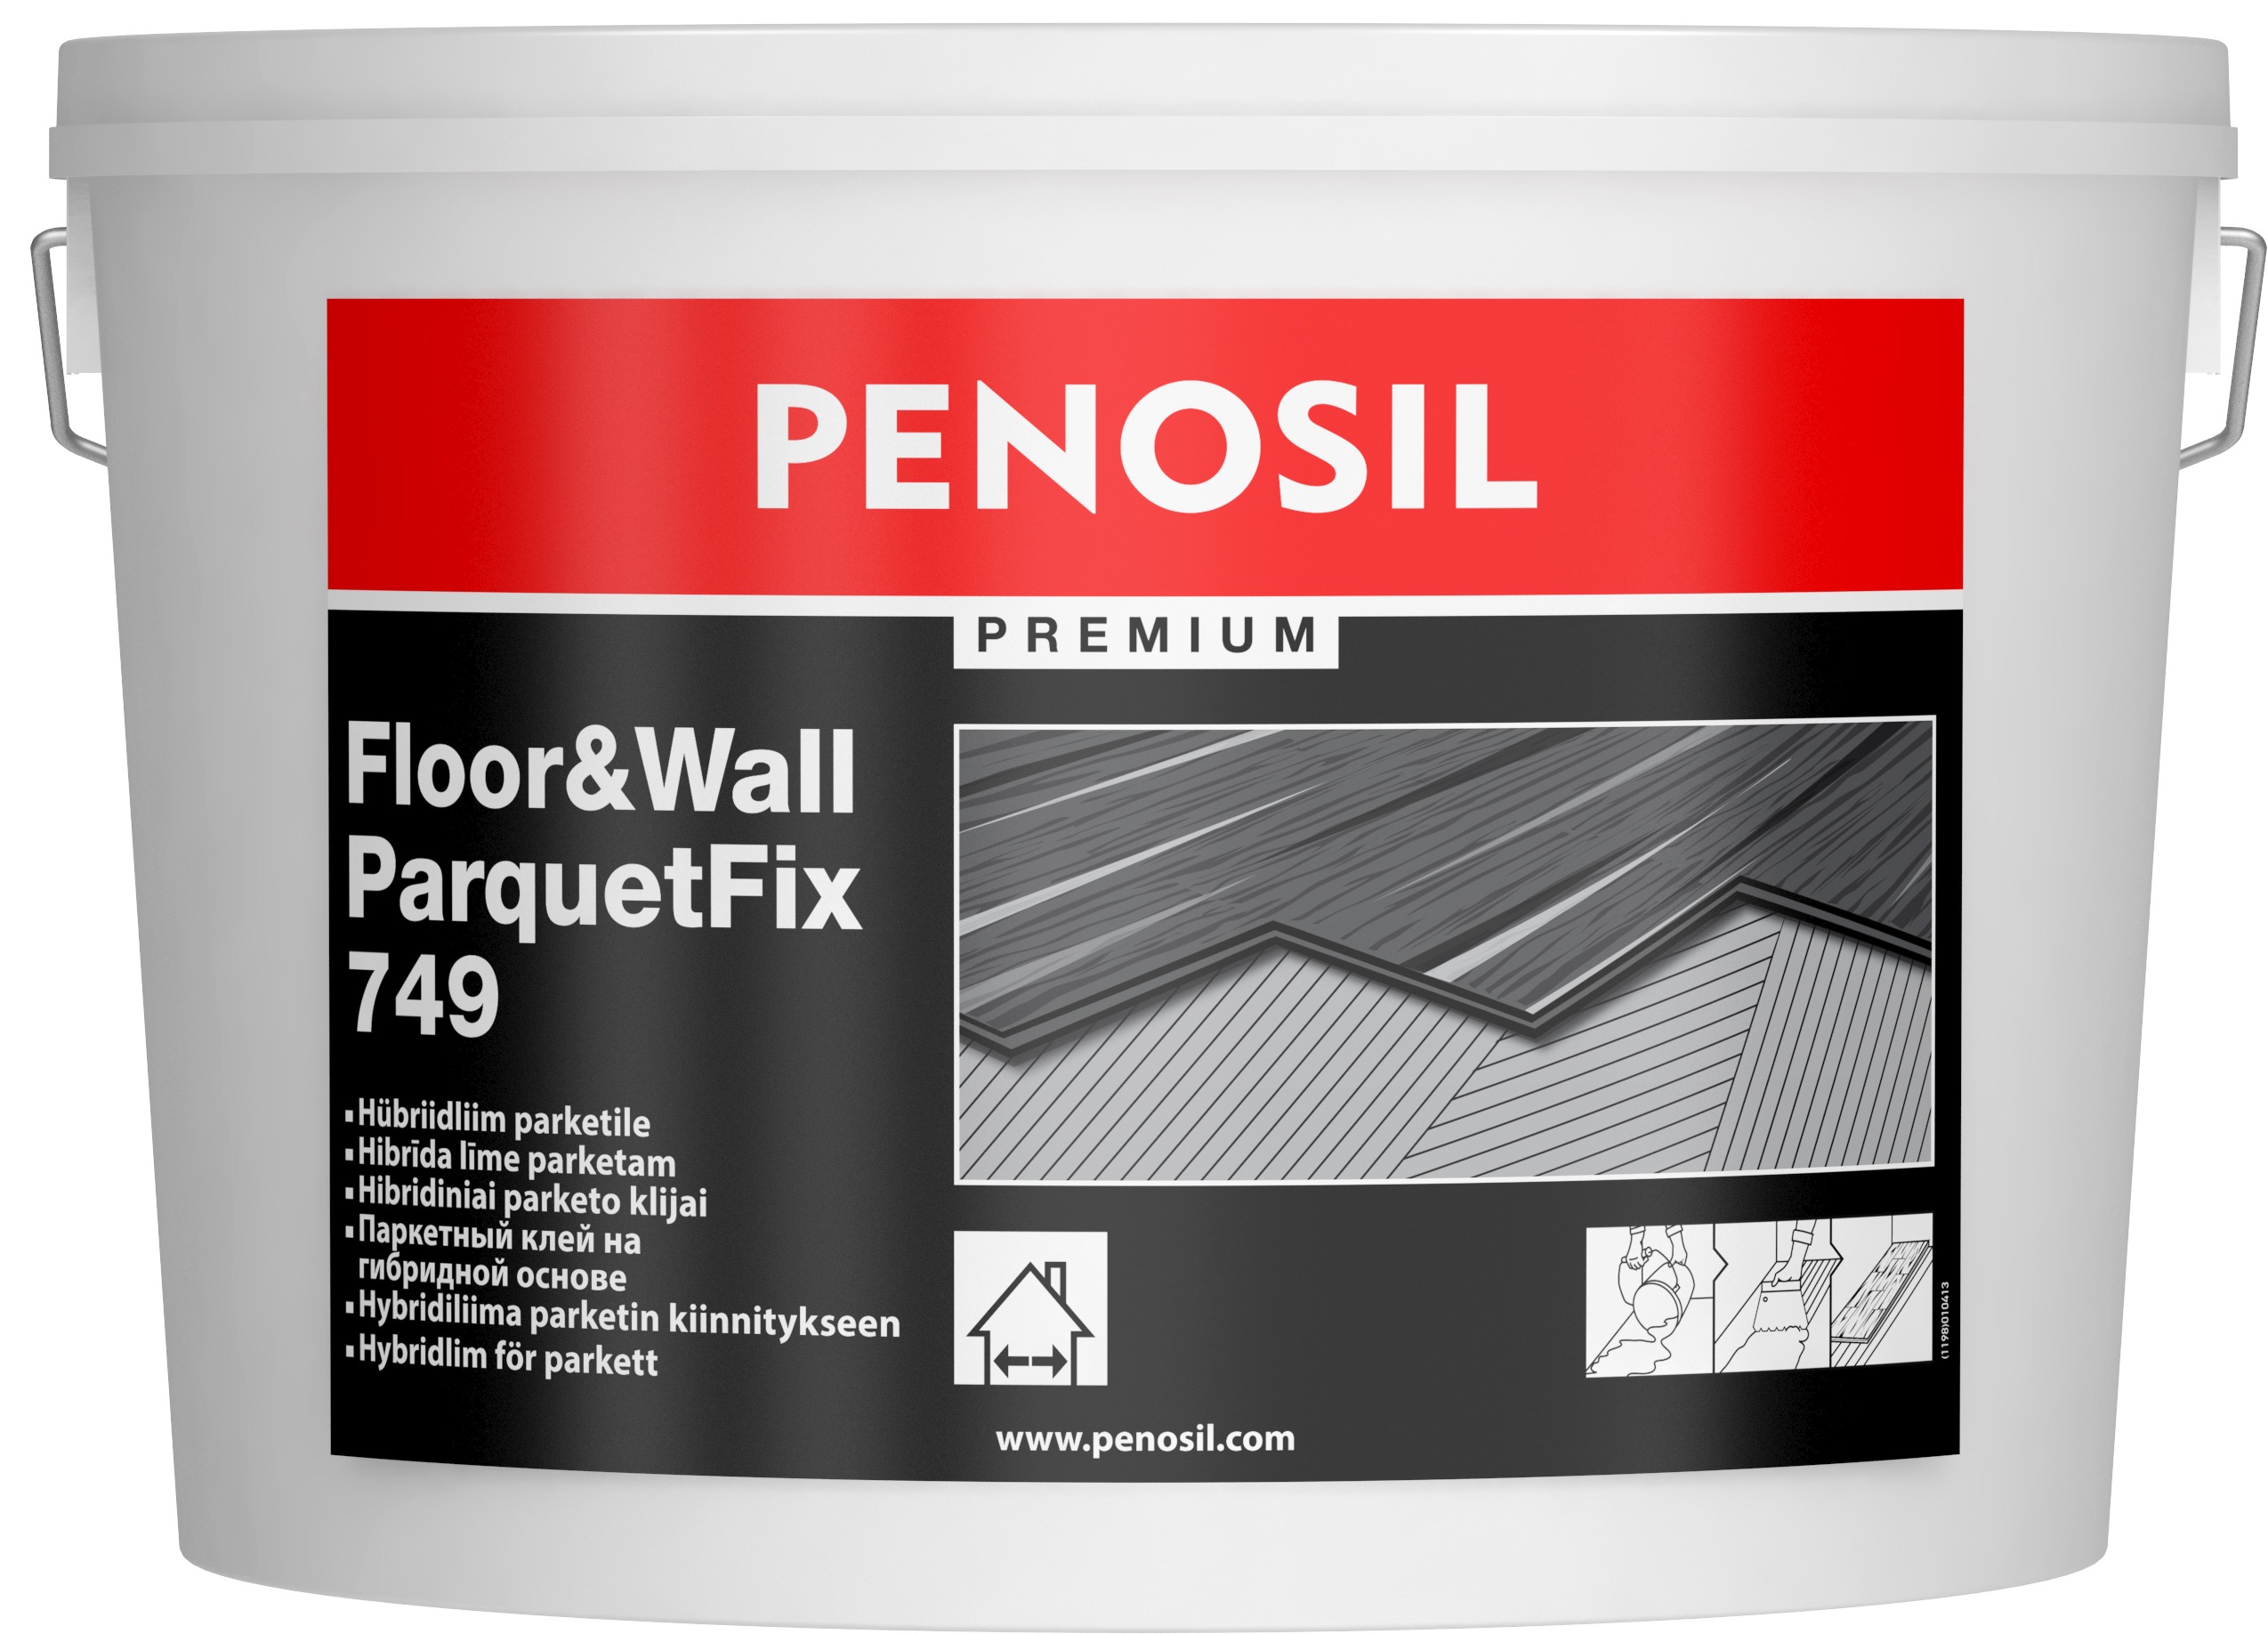 PENOSIL Premium Floor&Wall ParquetFix 749 k     